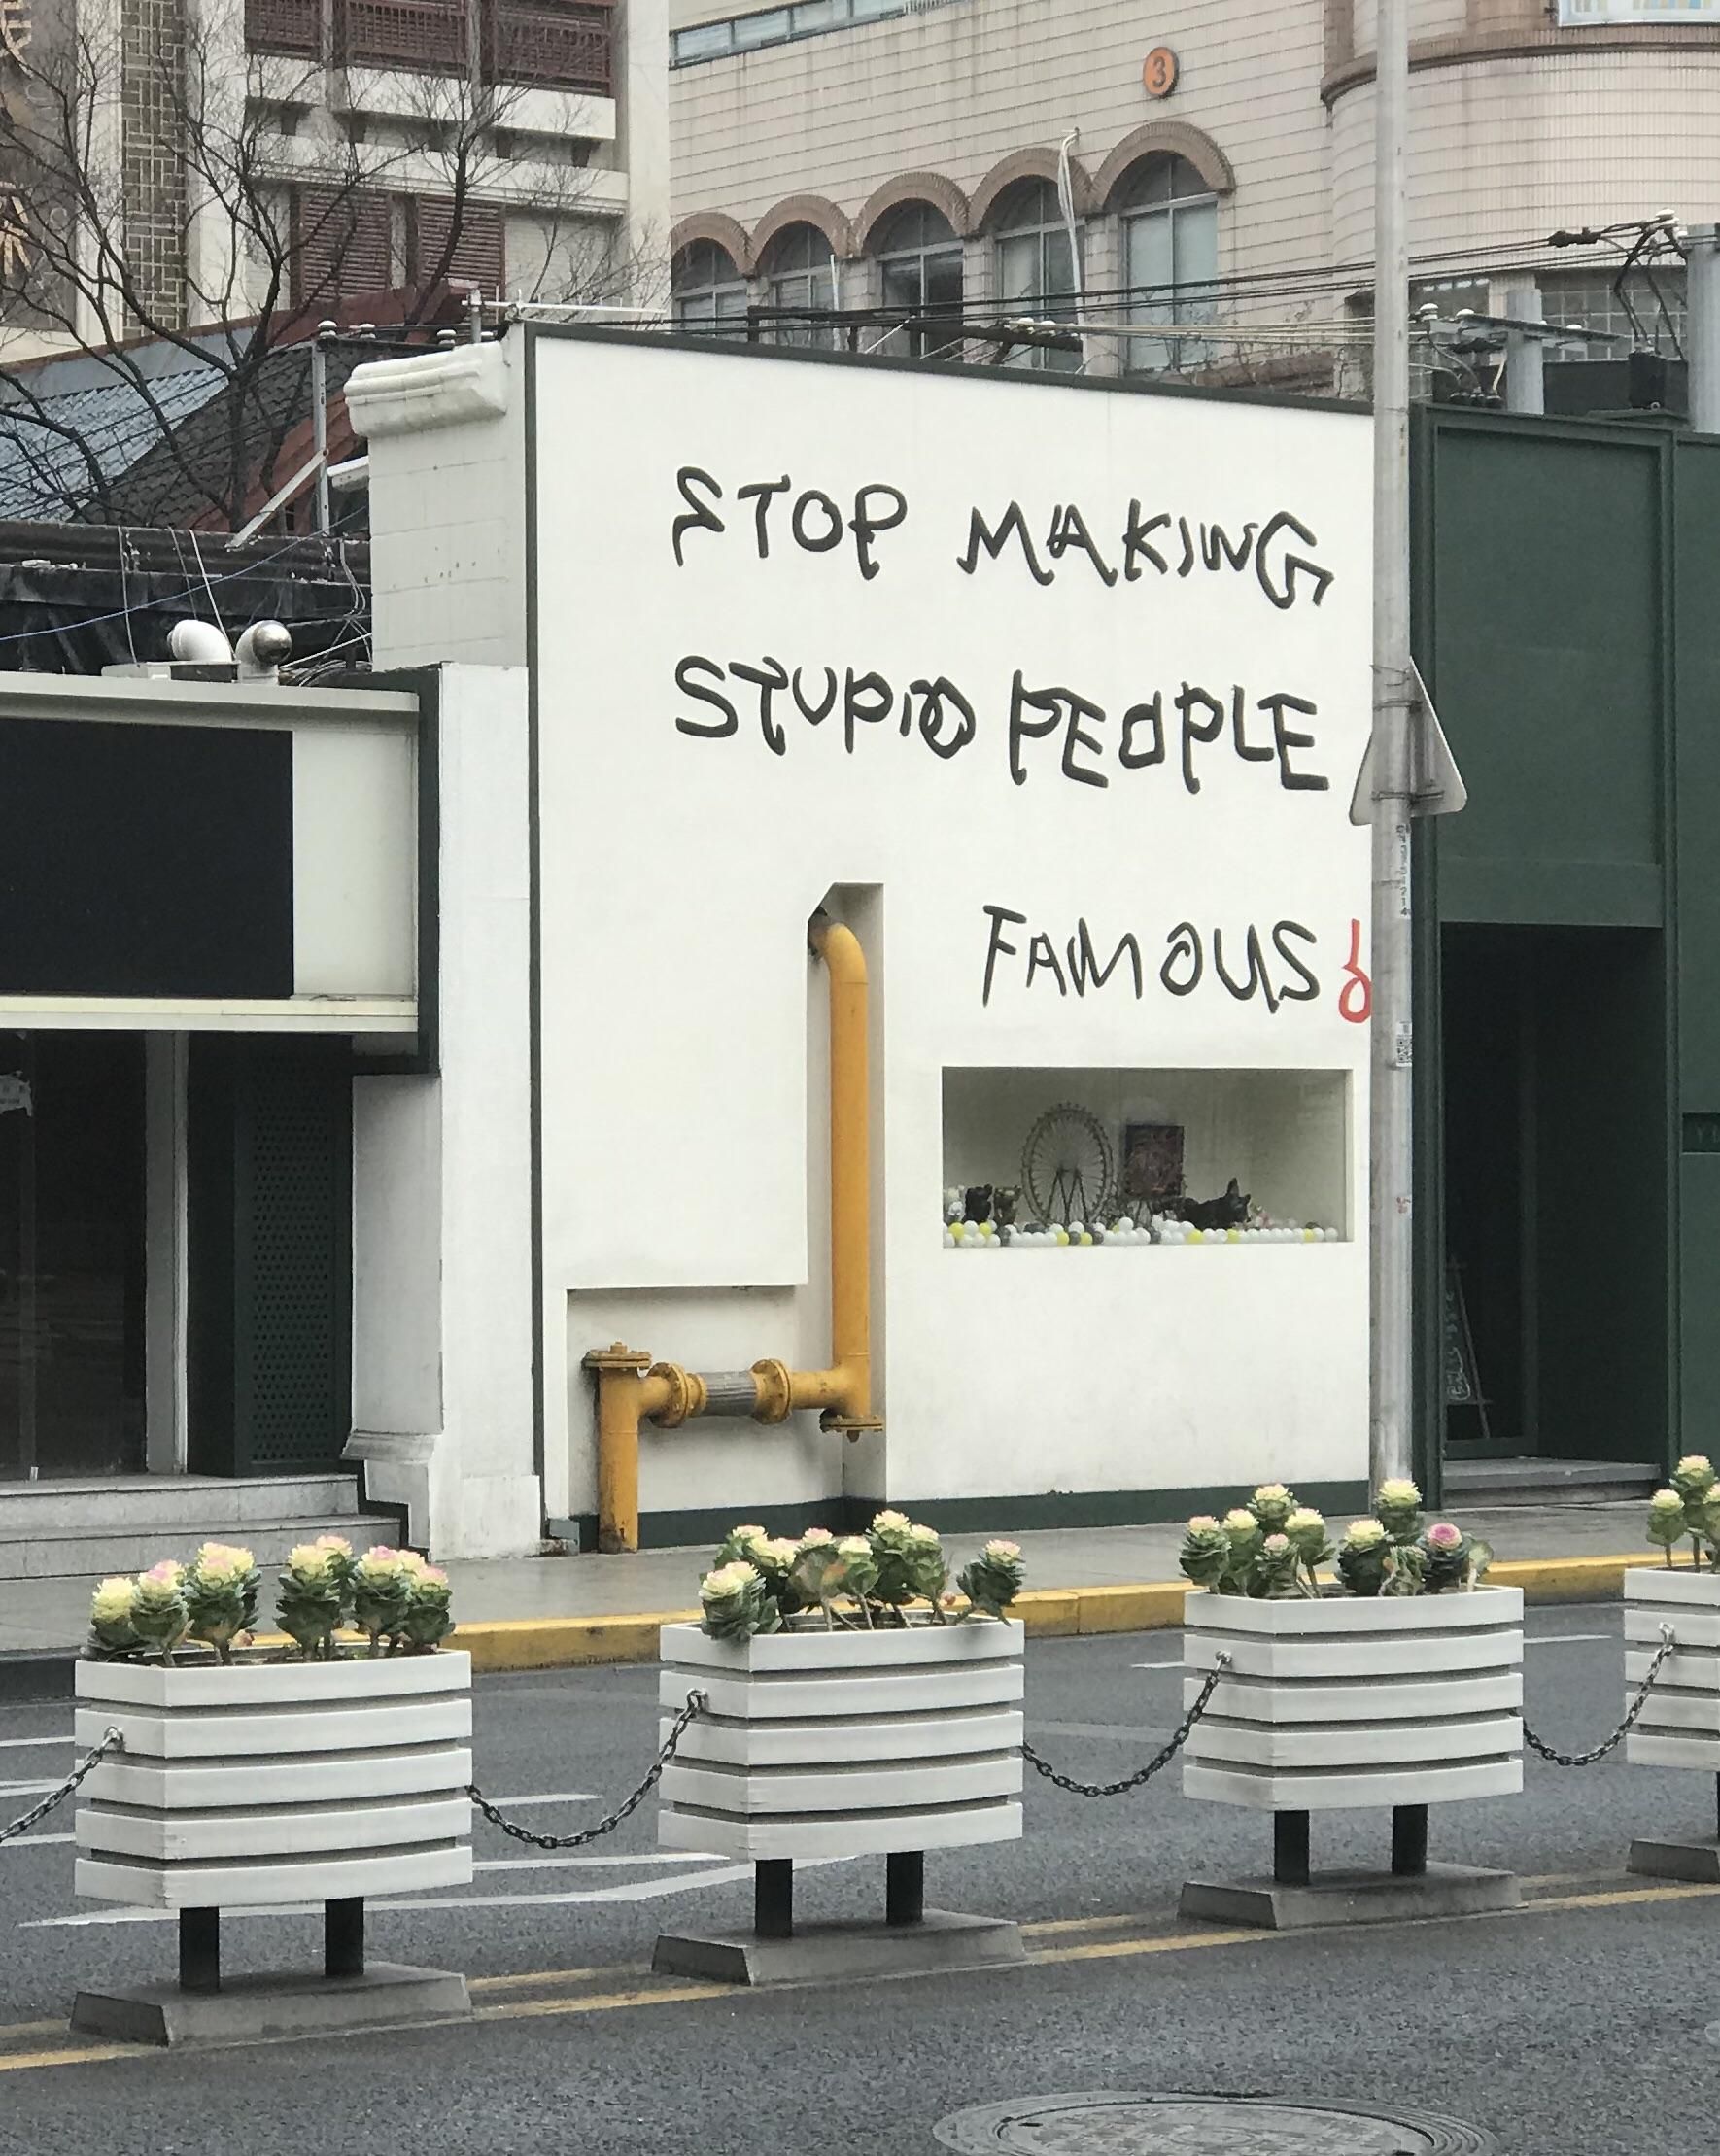 Pretty straightforward advice found on the streets of Shanghai